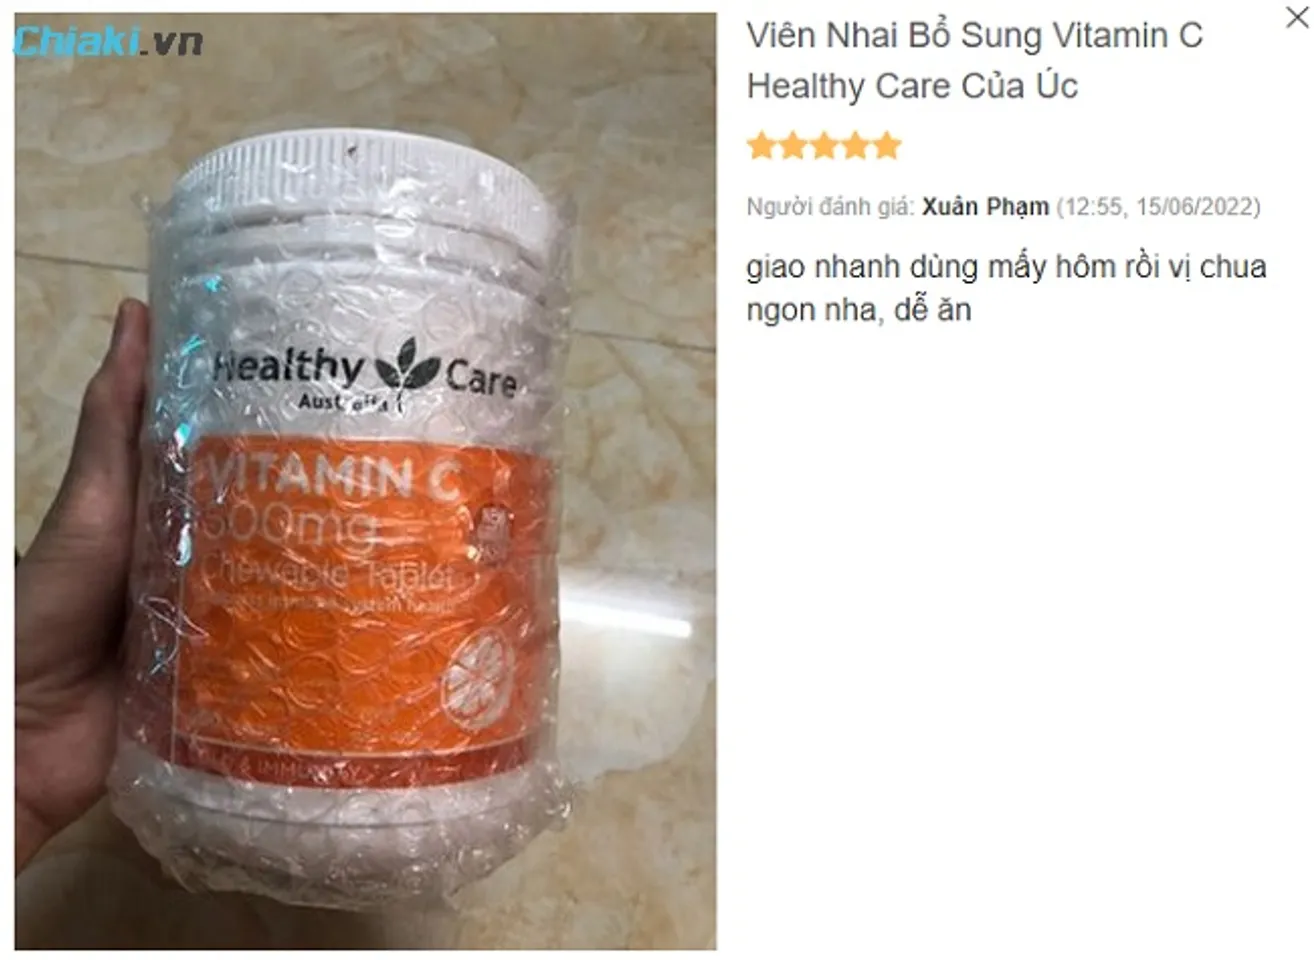 Review vitamin C Healthy Care từ người mua